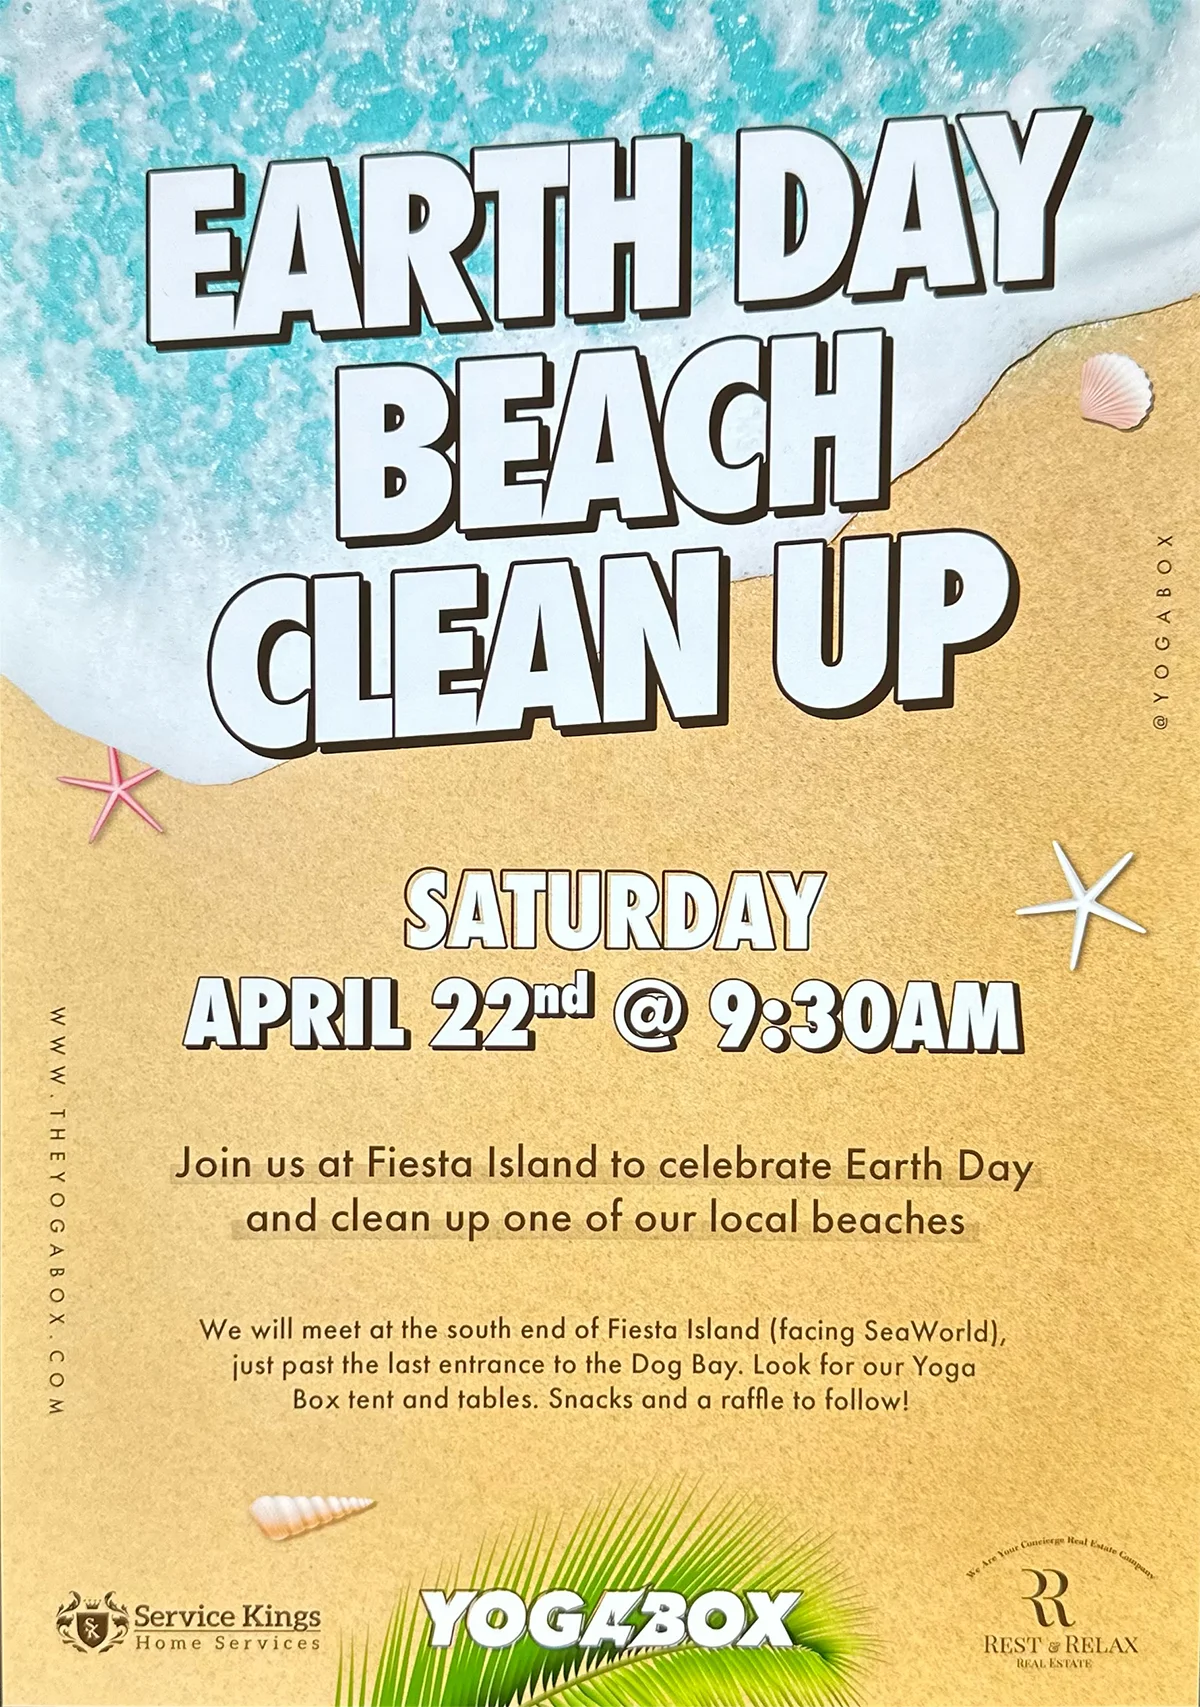 Earth Day Beach Clean-Up at Fiesta Island